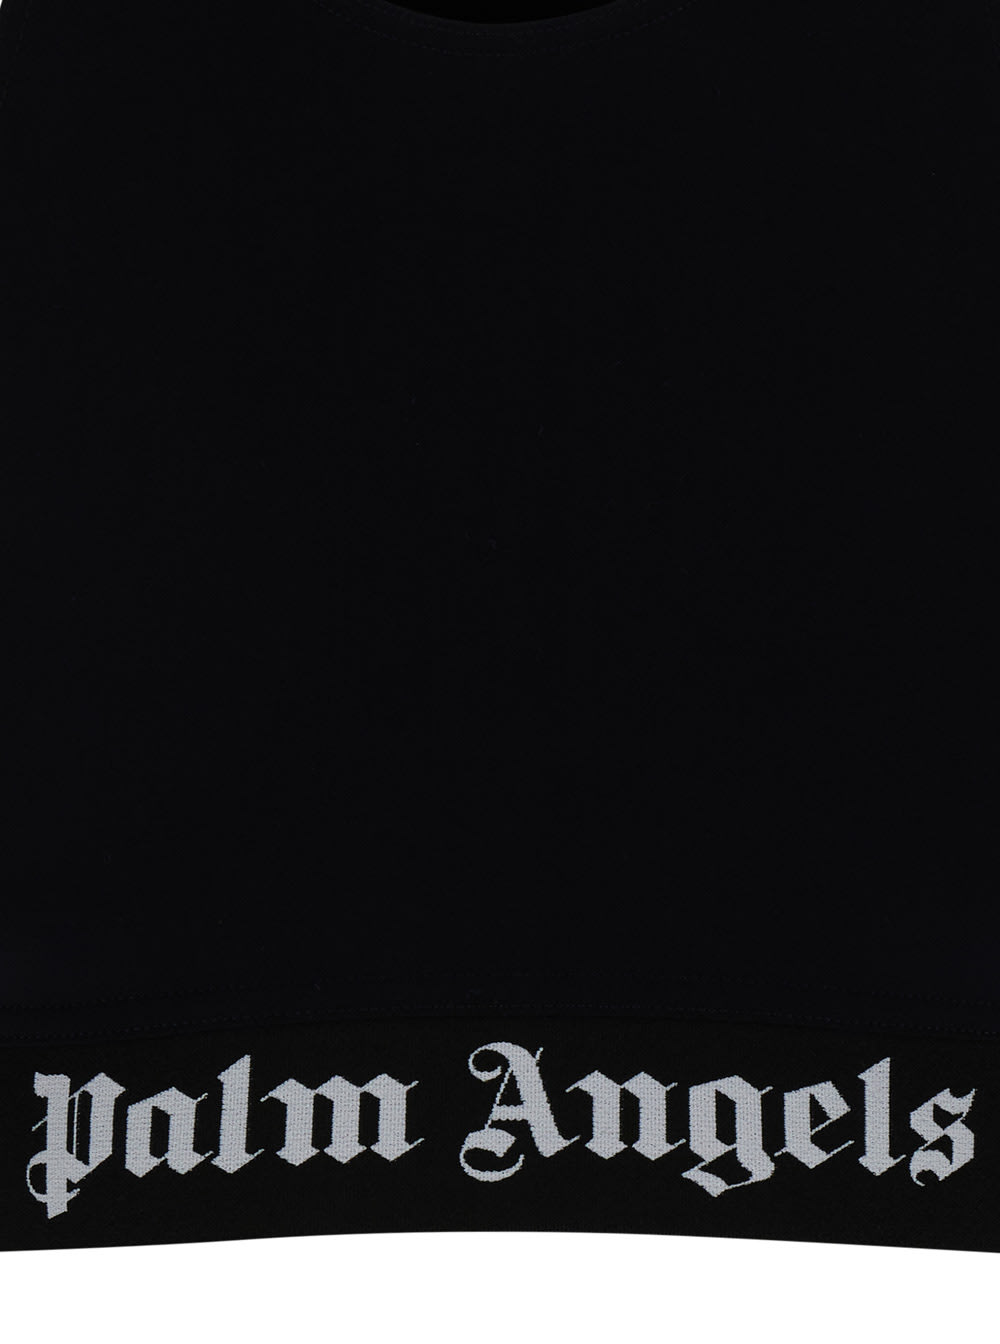 Shop Palm Angels Logo Sport Top Black White